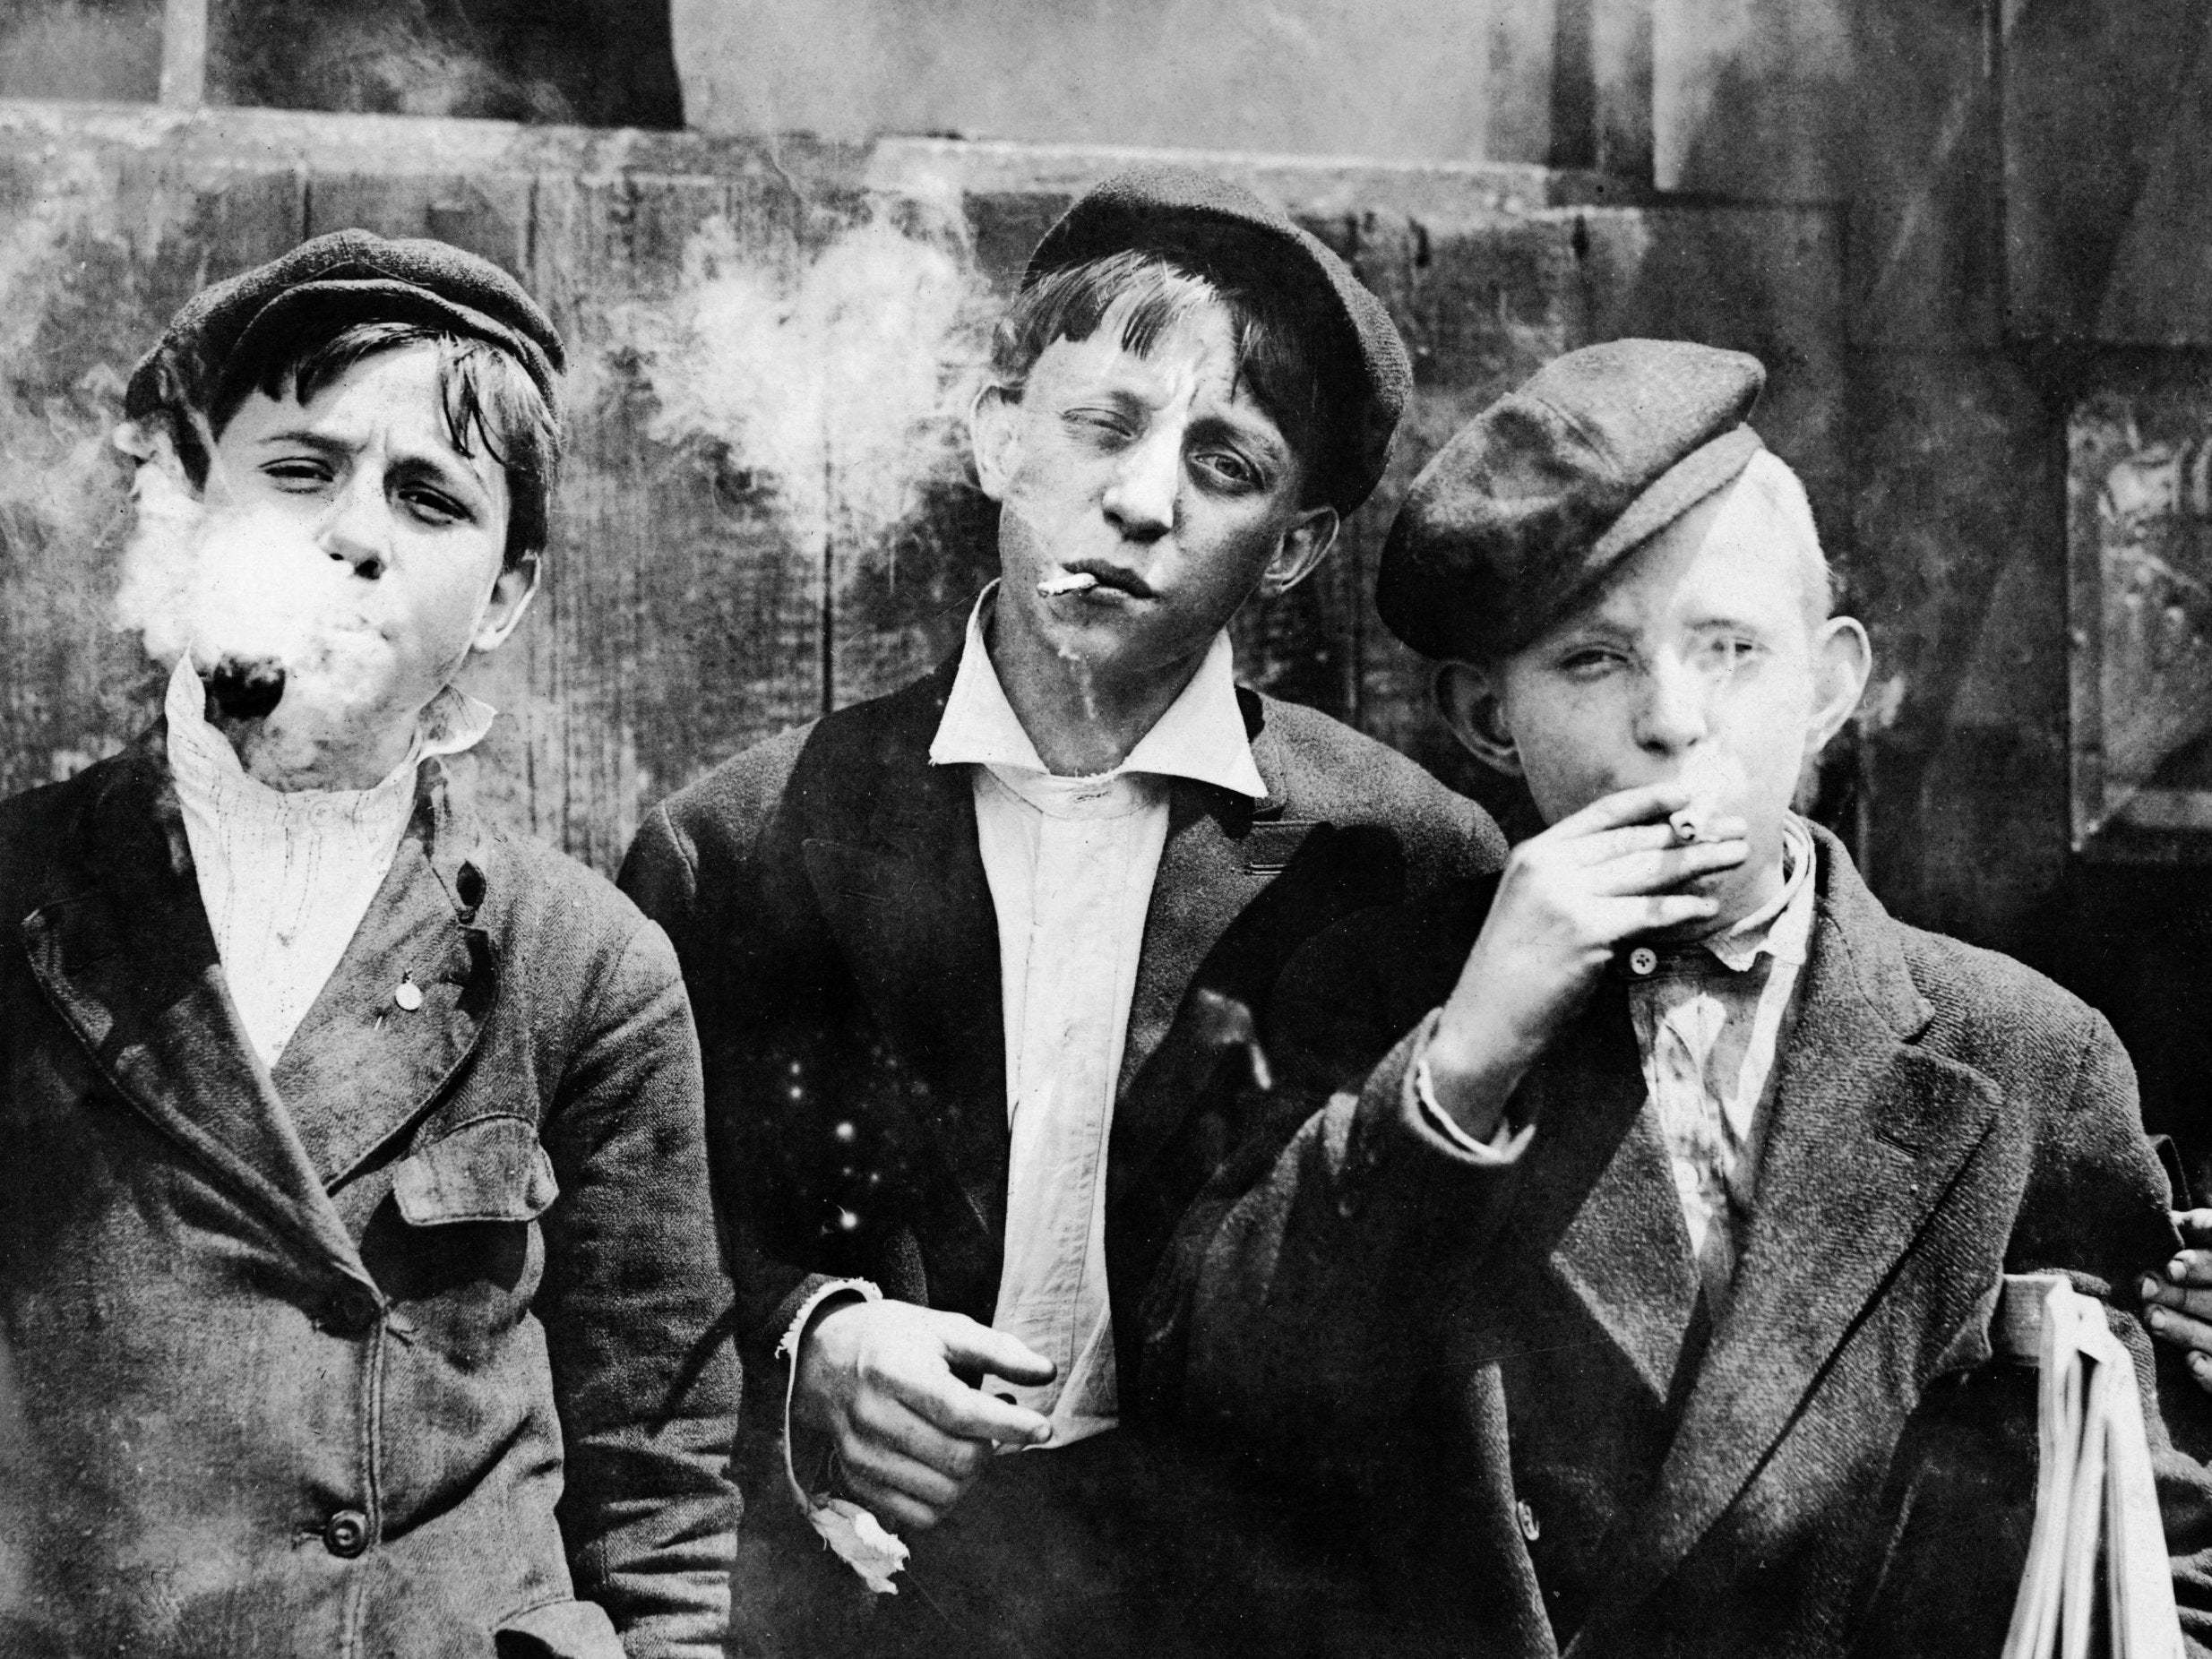 Newspaper boys smoking at Skeeter’s Branch near Franklin in St Louis, Missouri, 1910